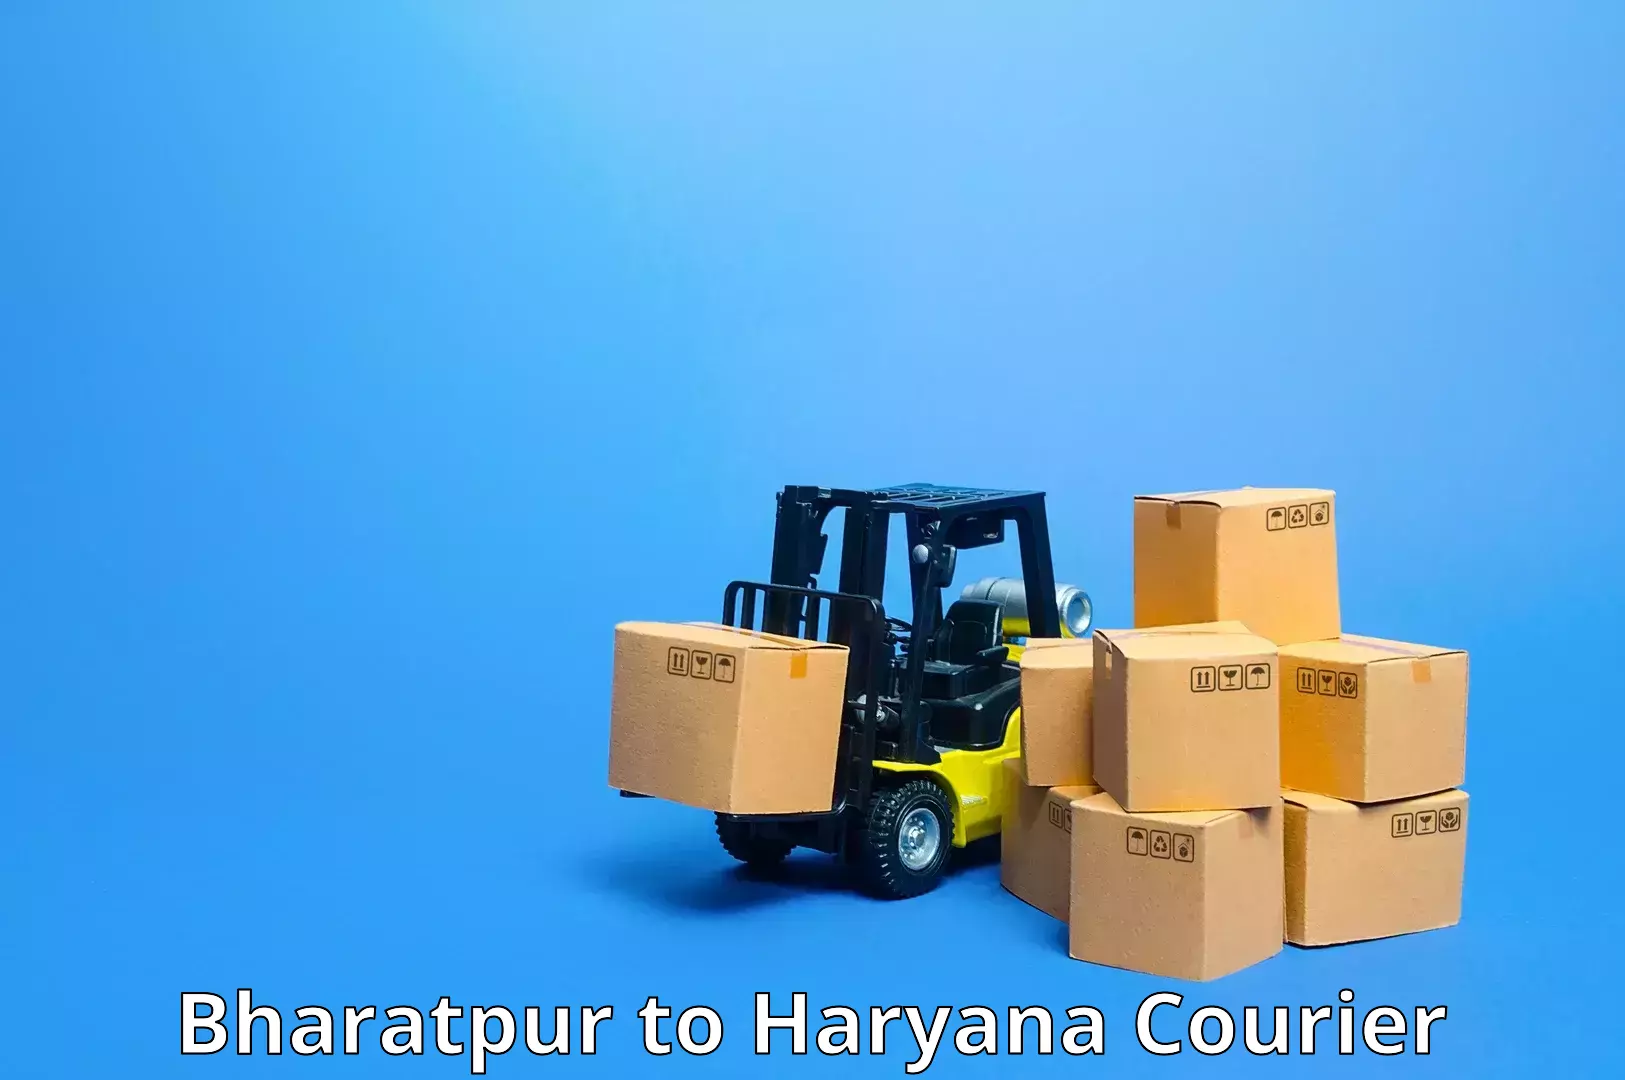 Tech-enabled shipping Bharatpur to Ambala